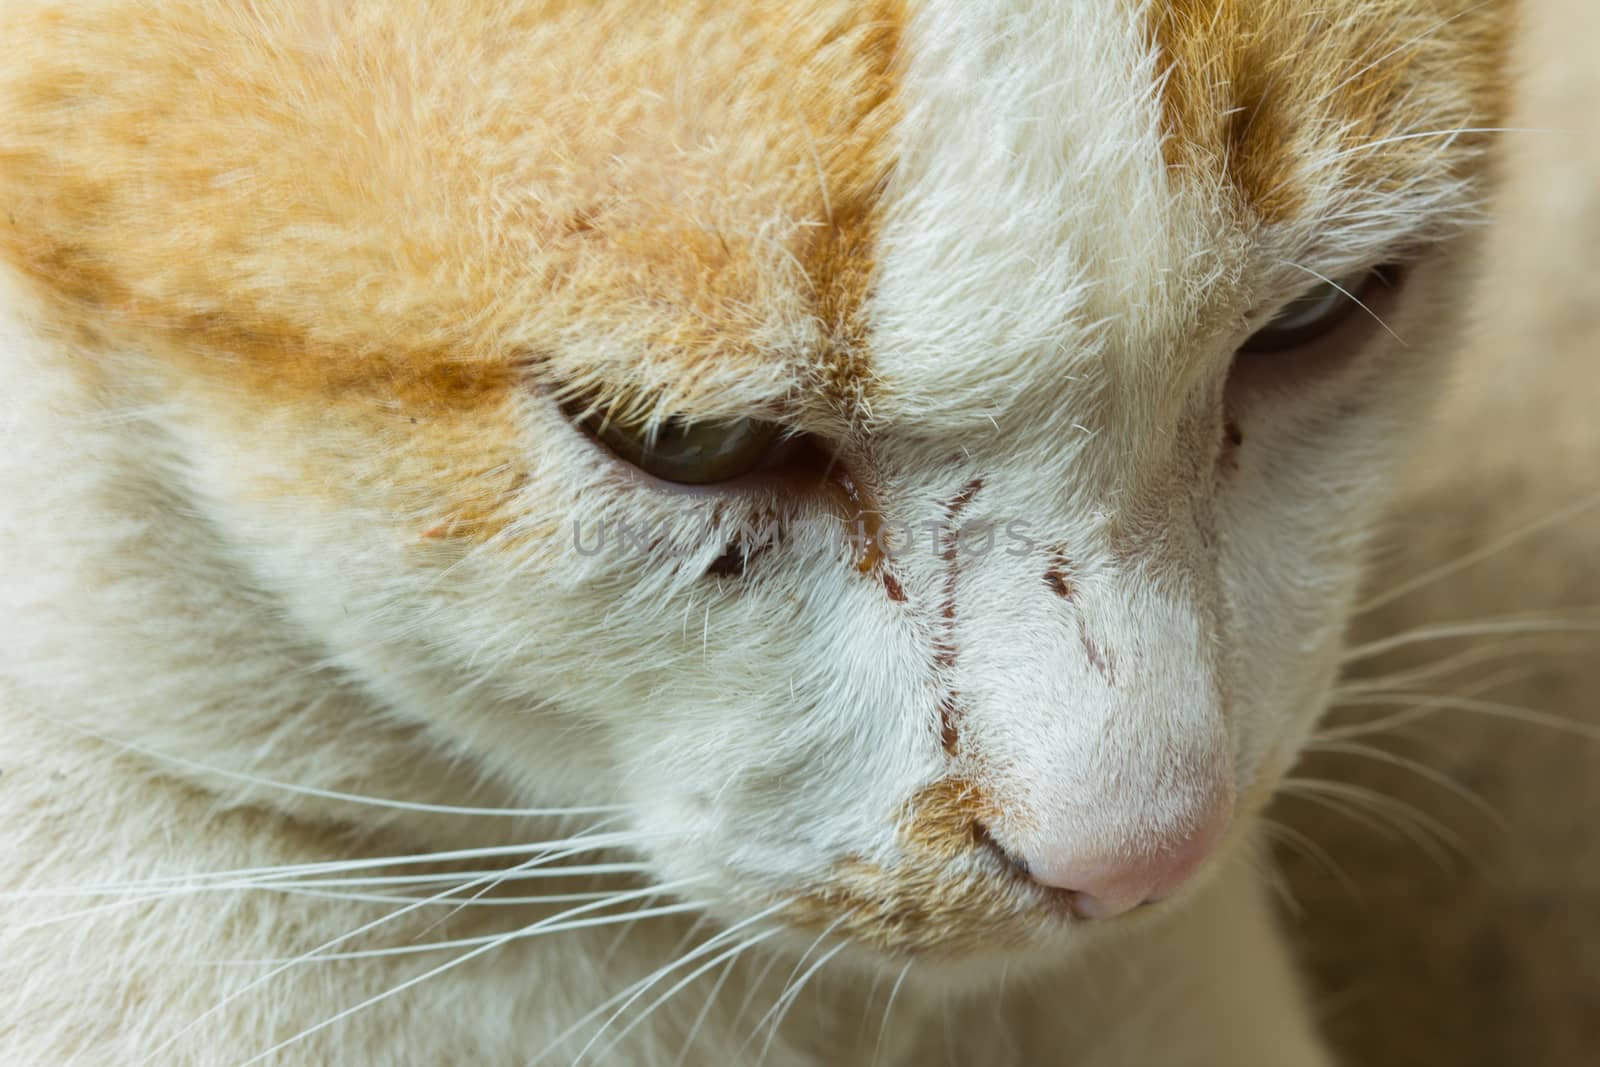 Closeup of tabby cat face in profile